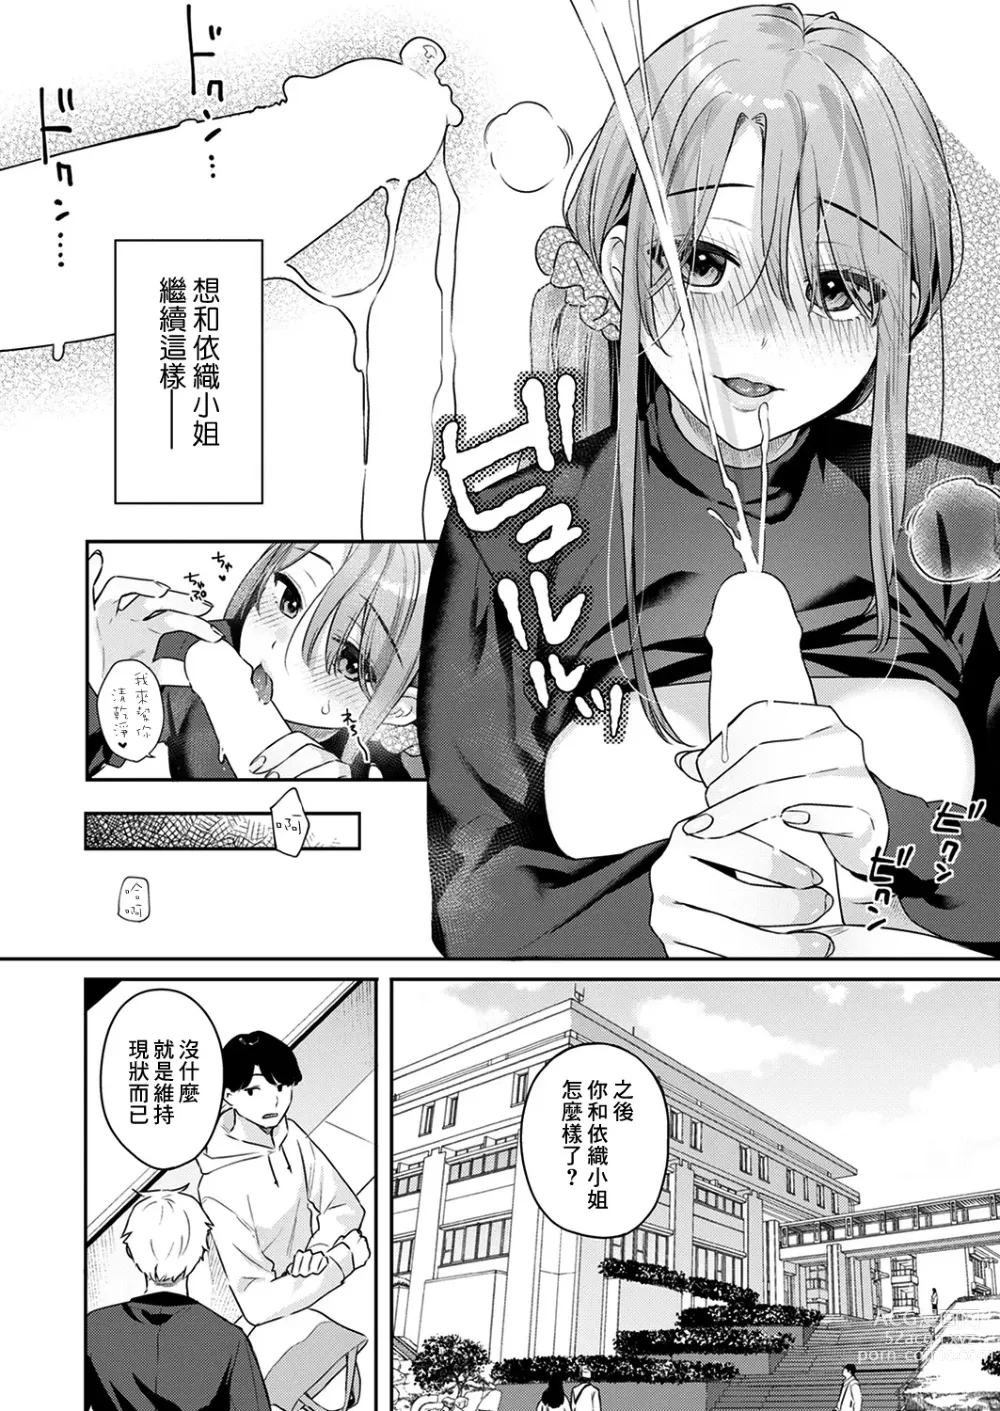 Page 6 of manga Otona no Issen Lesson 2